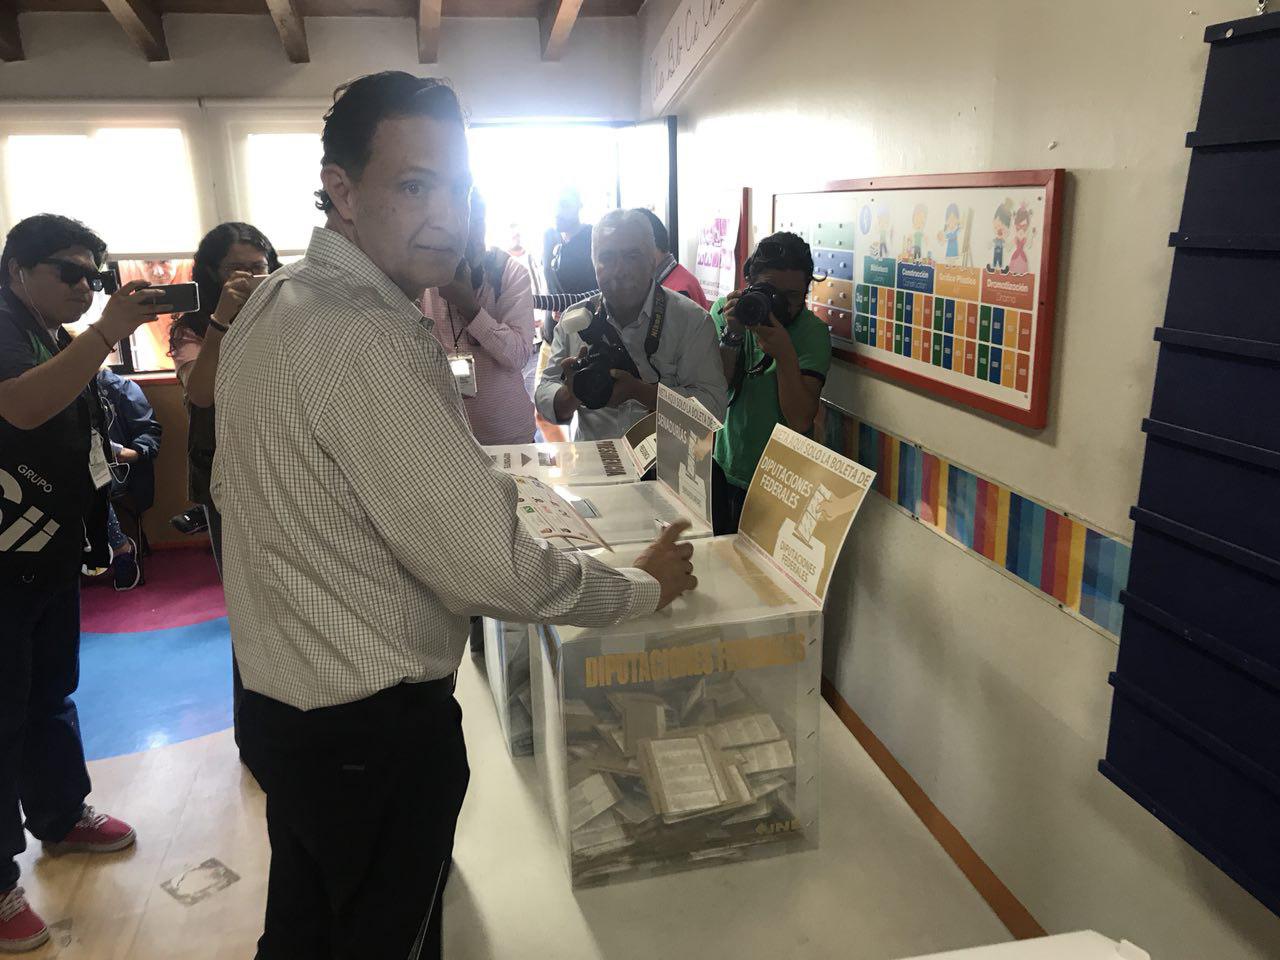  Mauricio Kuri vota en el Fontanar, espera jornada electoral tranquila